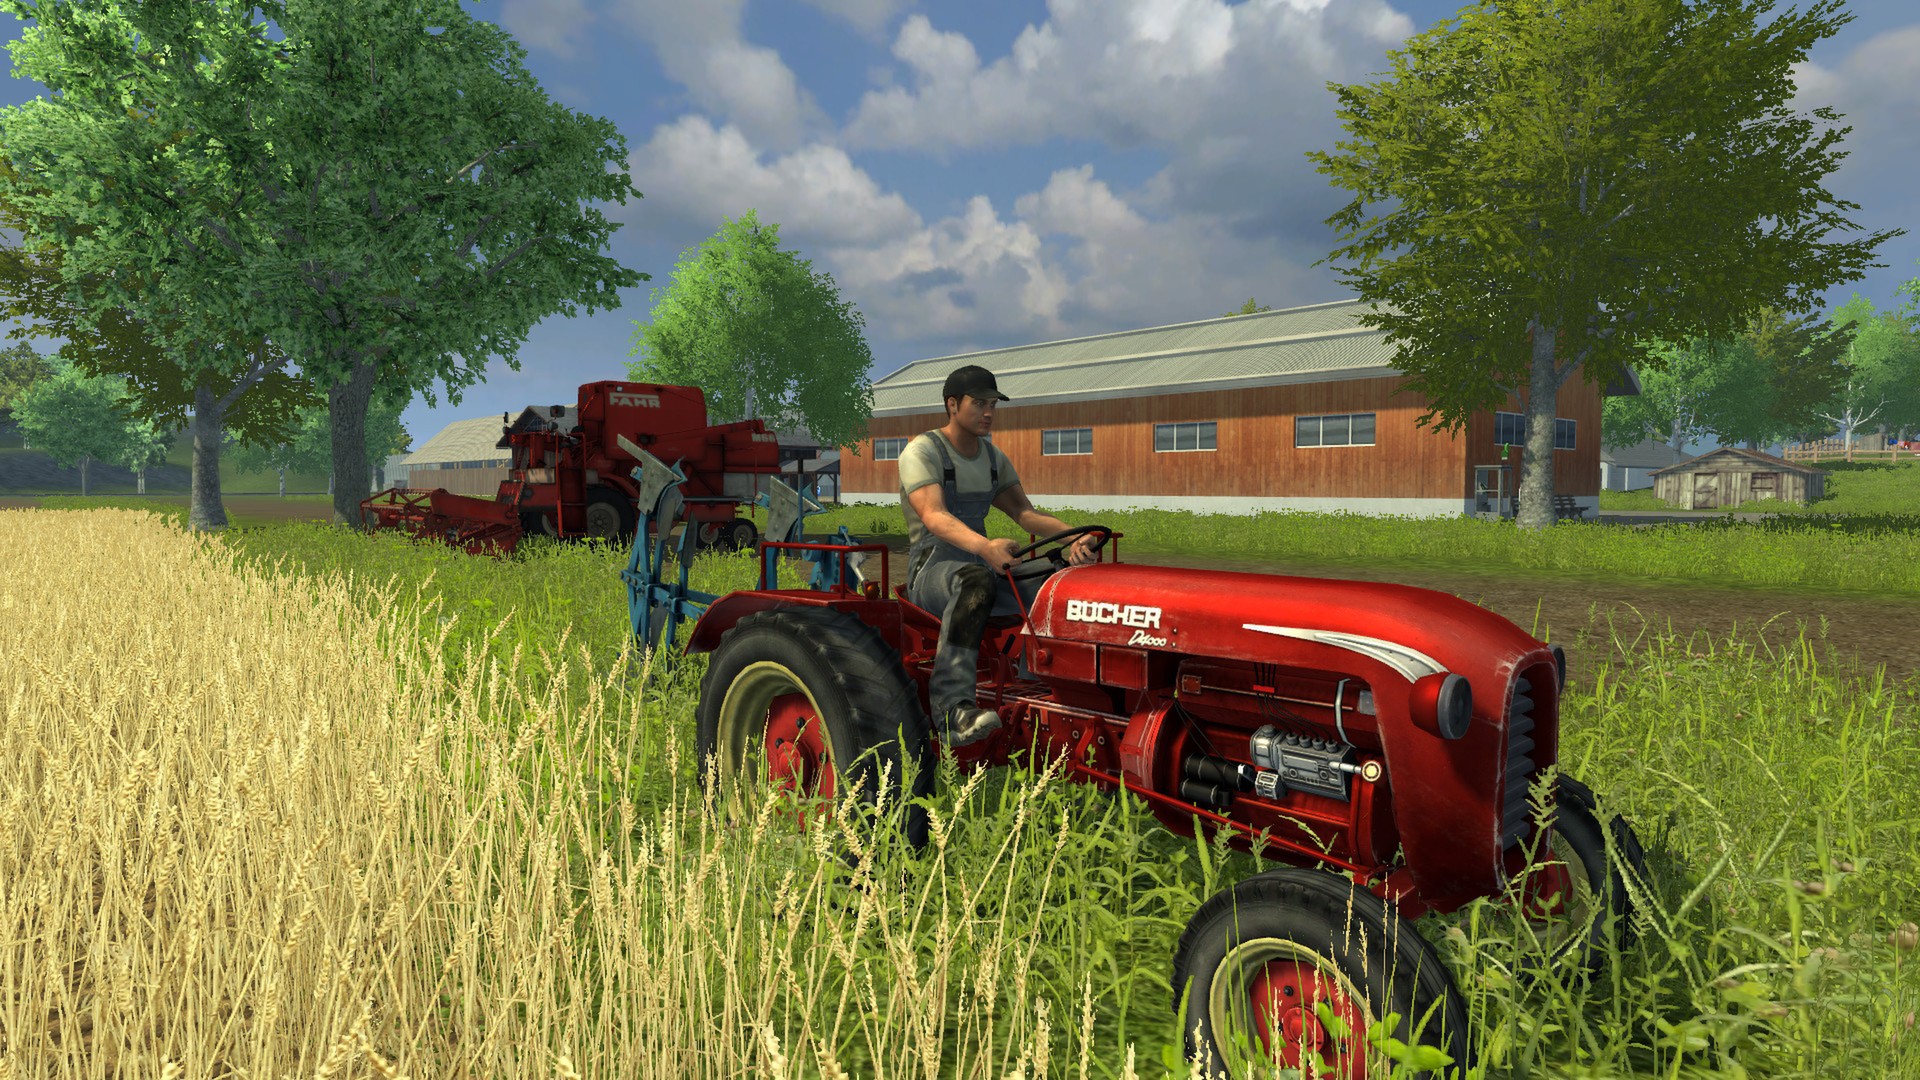 Farming Simulator 2013 Titanium Edition on Steam